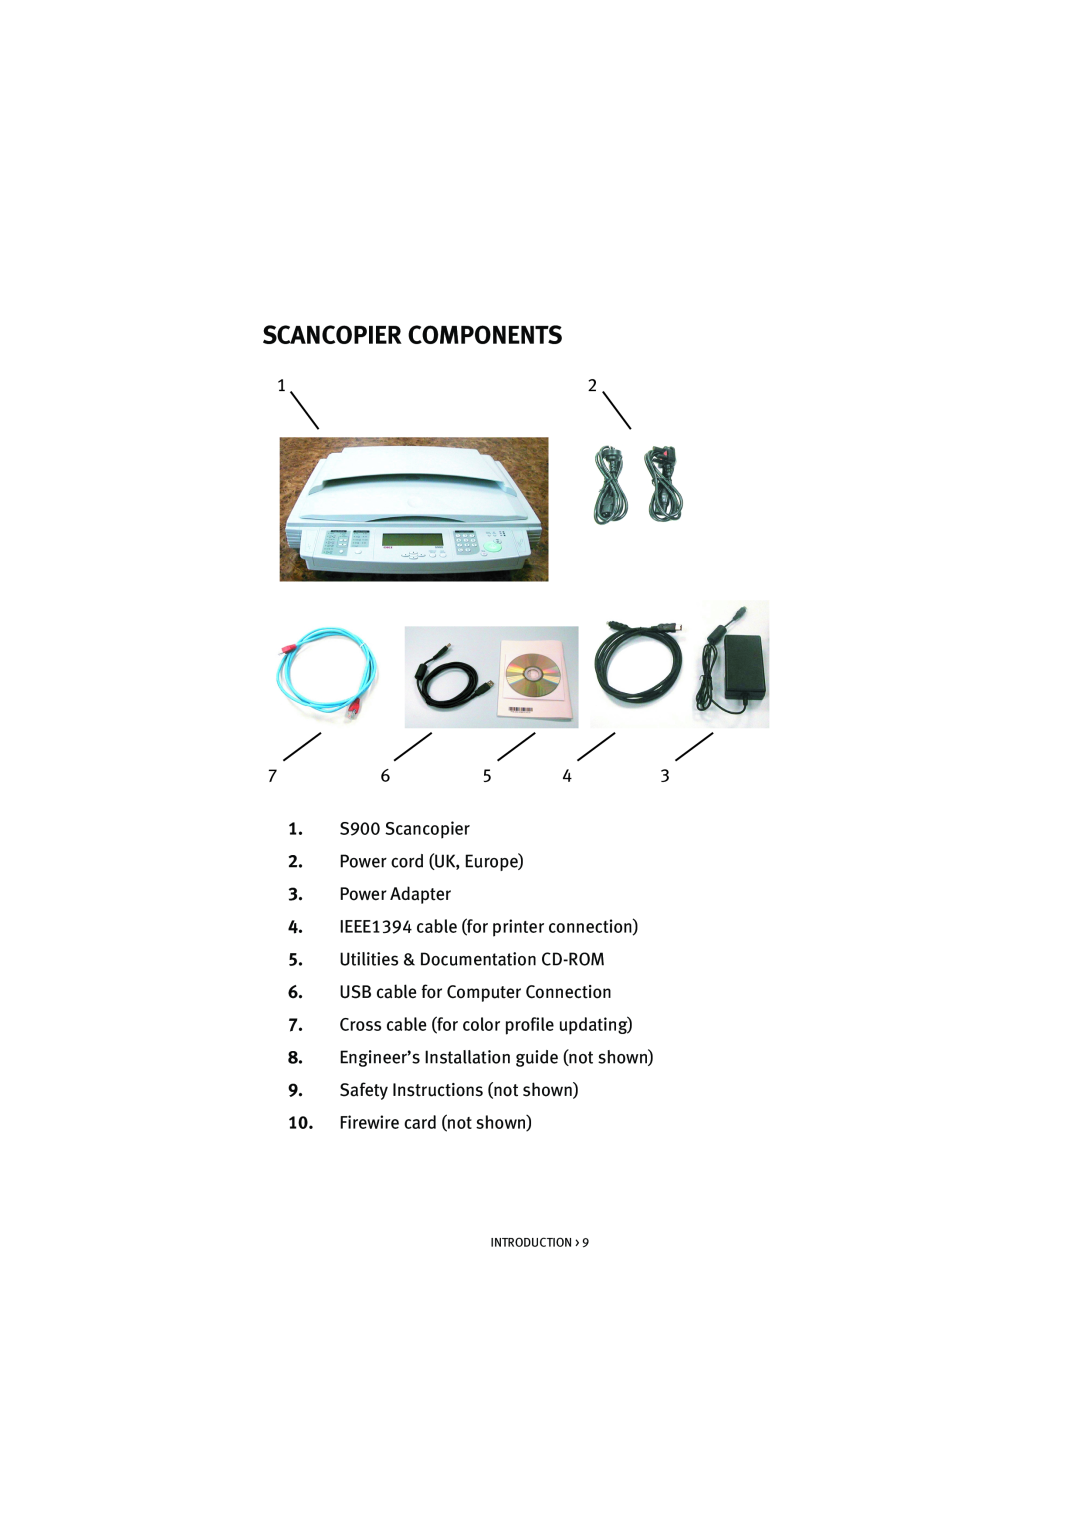 Oki manual Scancopier Components, 1. S900 Scancopier 2. Power cord UK, Europe 3. Power Adapter, Introduction 